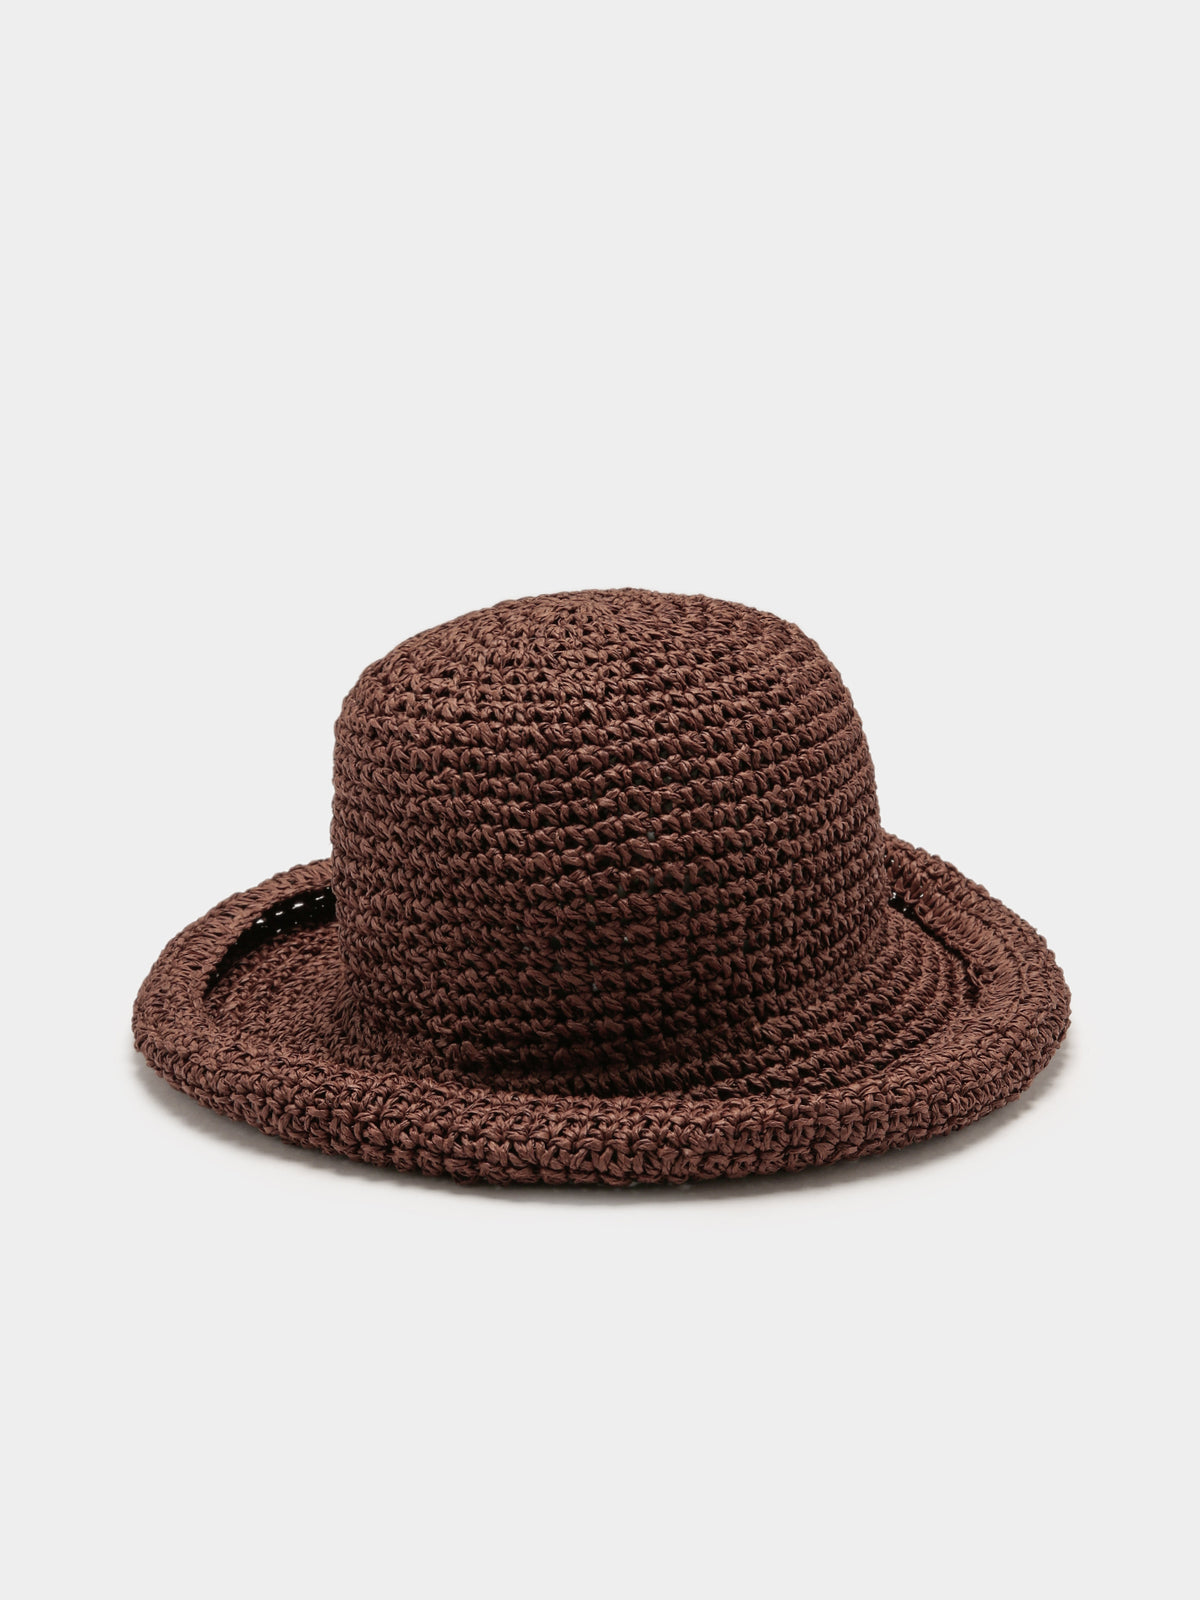 Crochet Sun Hat in Chocolate